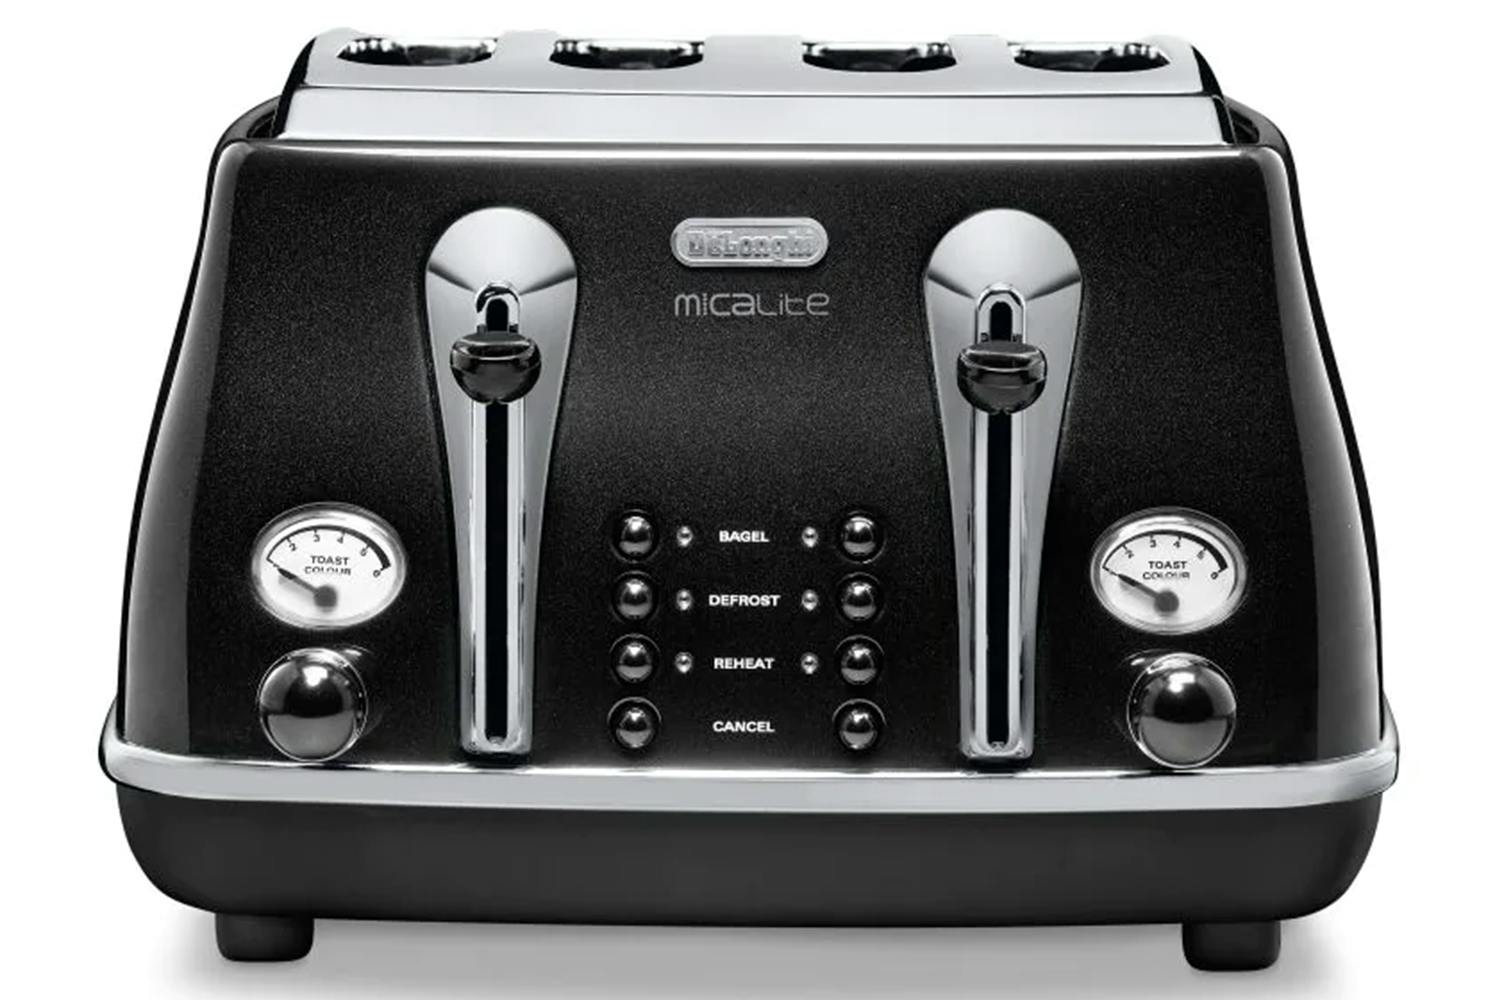 DeLonghi Icona Micalite 4 Slice Toaster | CTOM4003.BK | Black